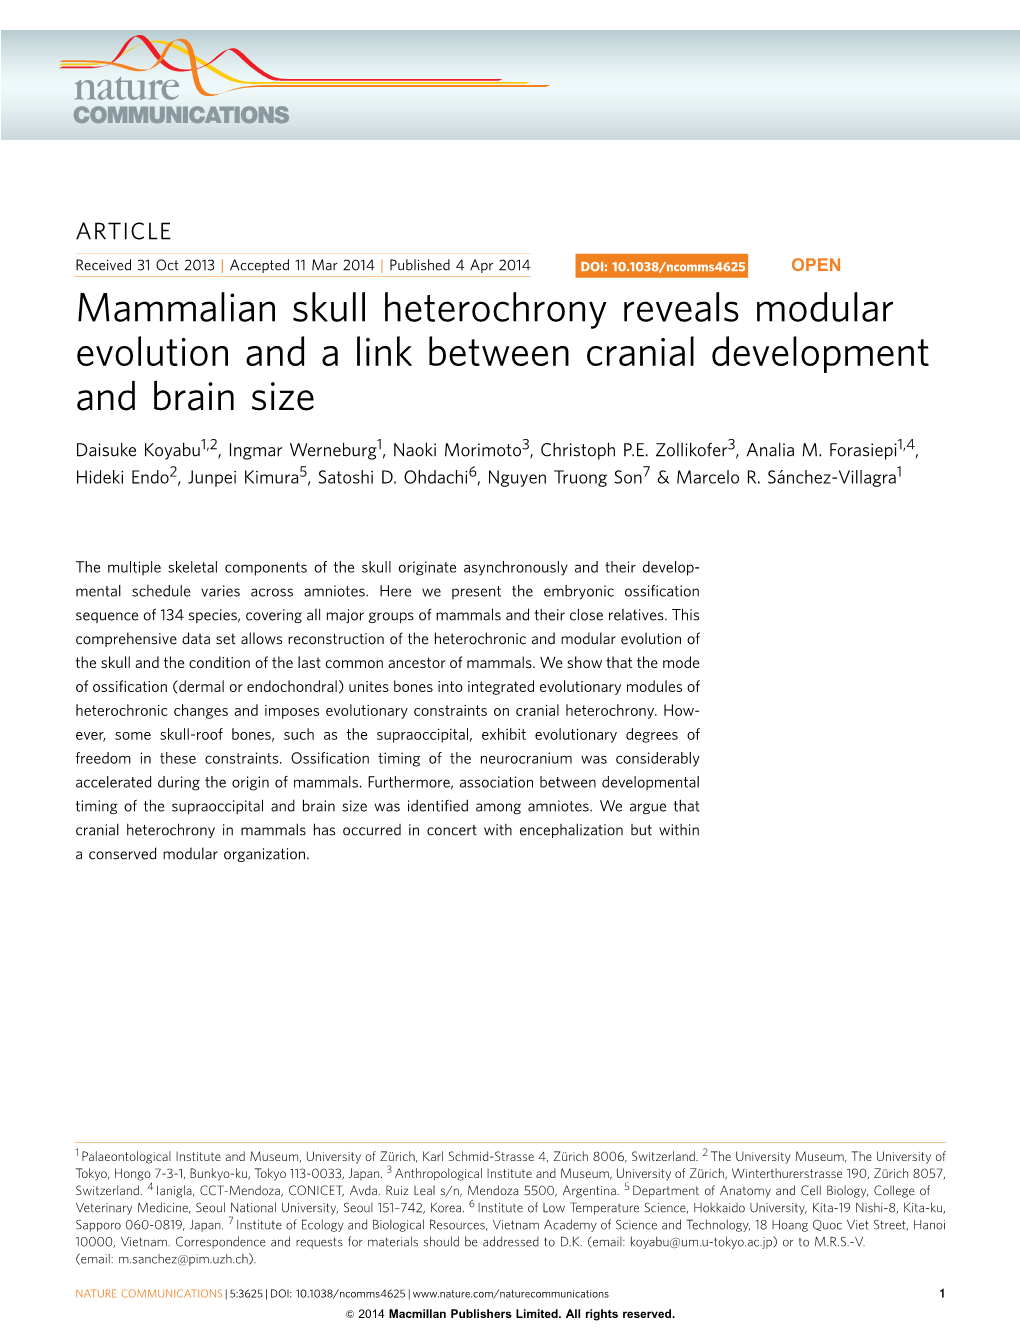 Mammalian Skull Heterochrony Reveals Modular Evolution and a Link Between Cranial Development and Brain Size